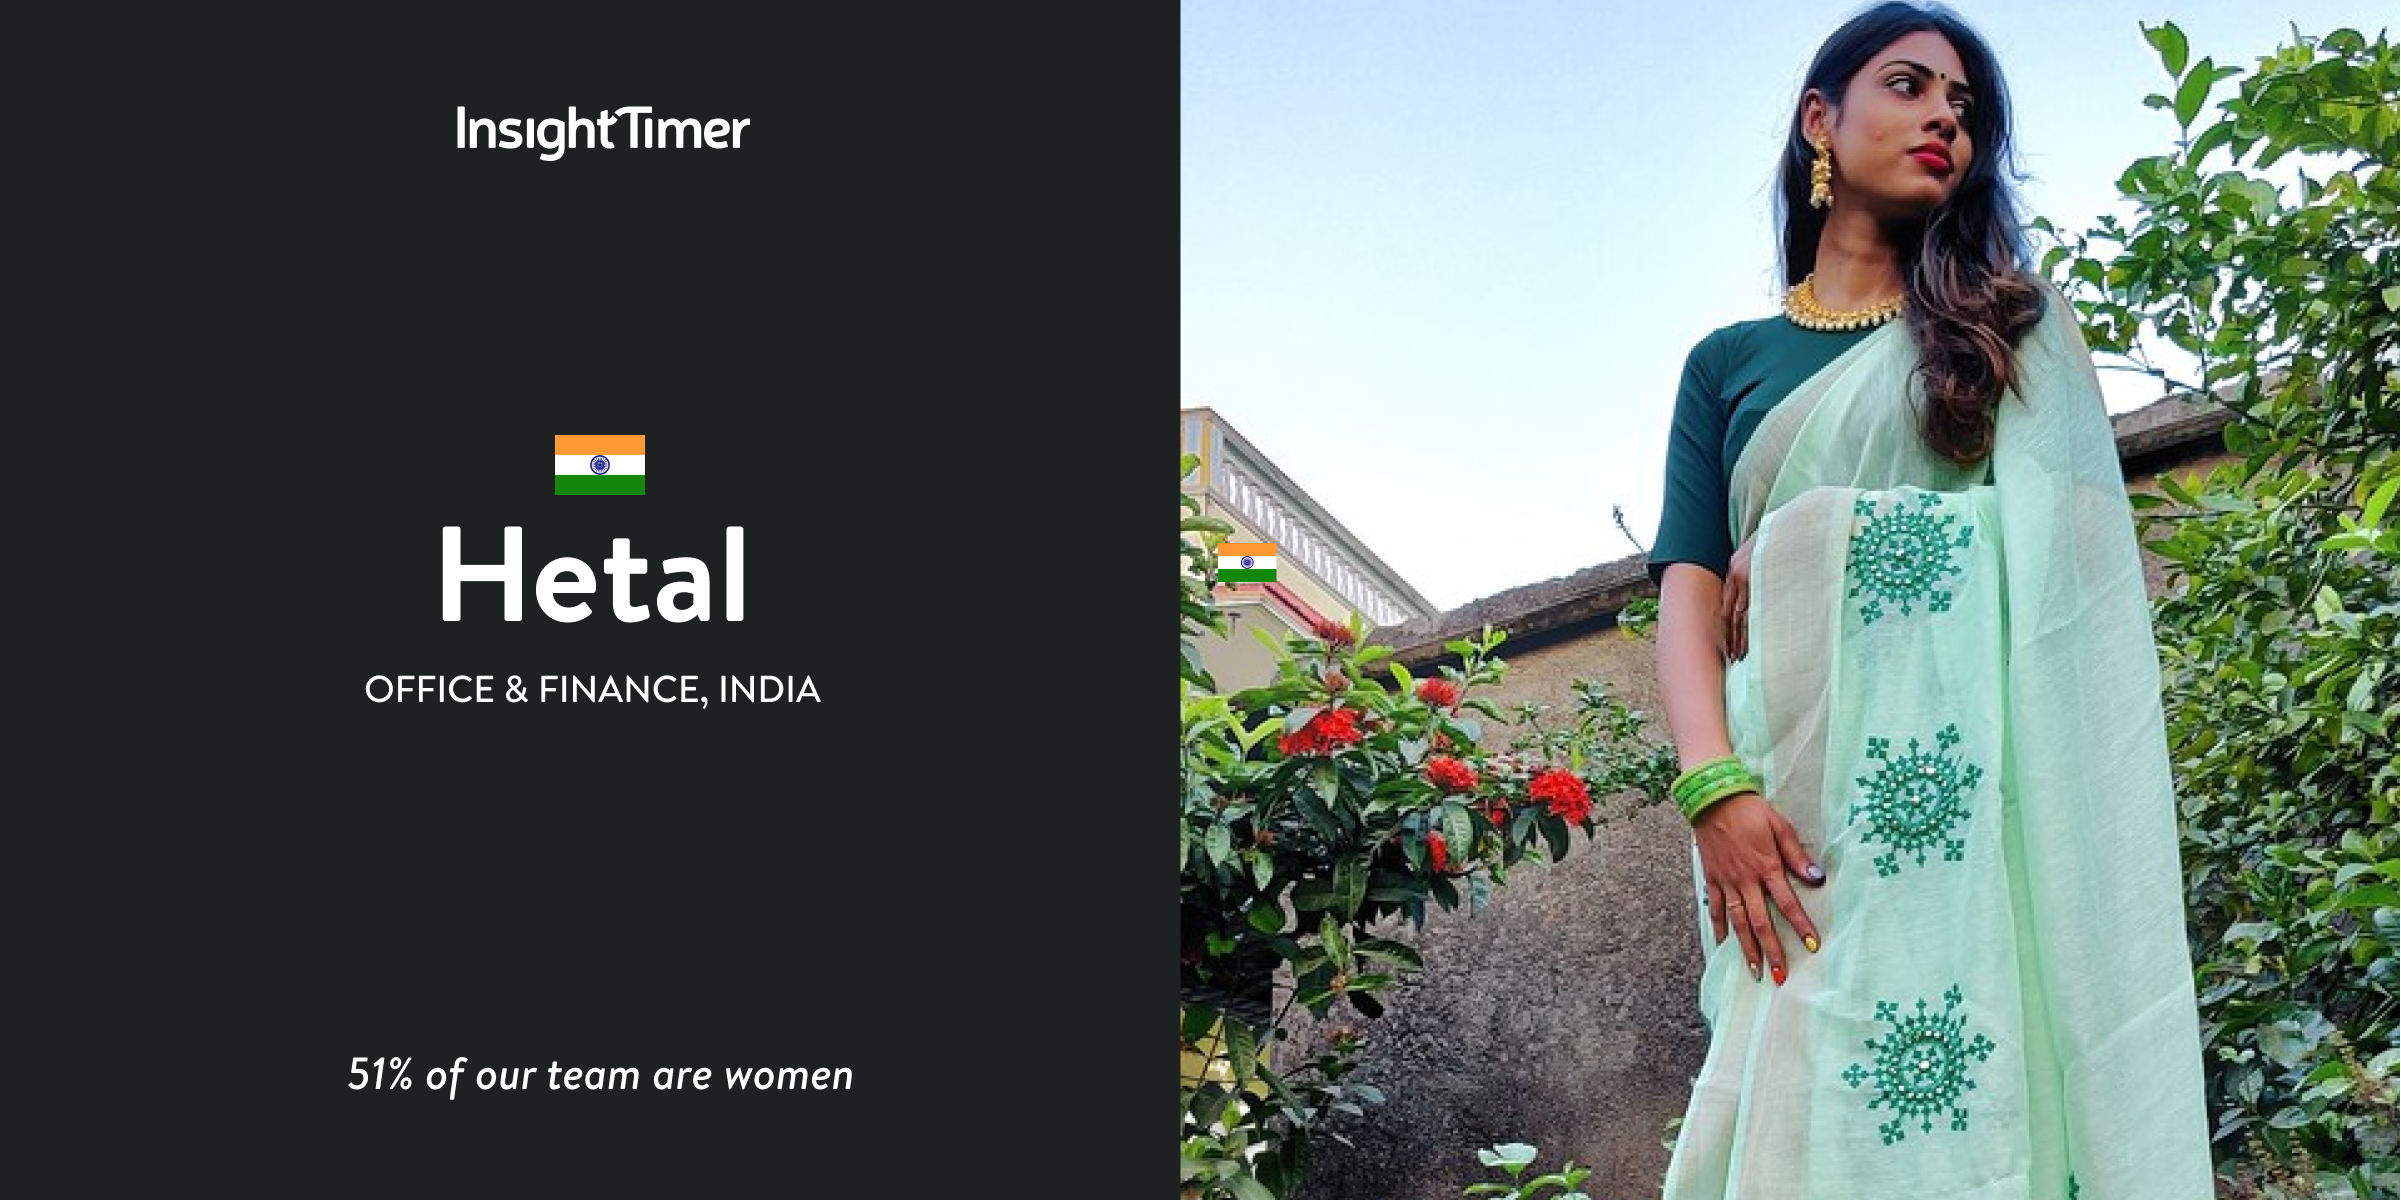 Meet Hetal – Office & Finance, India